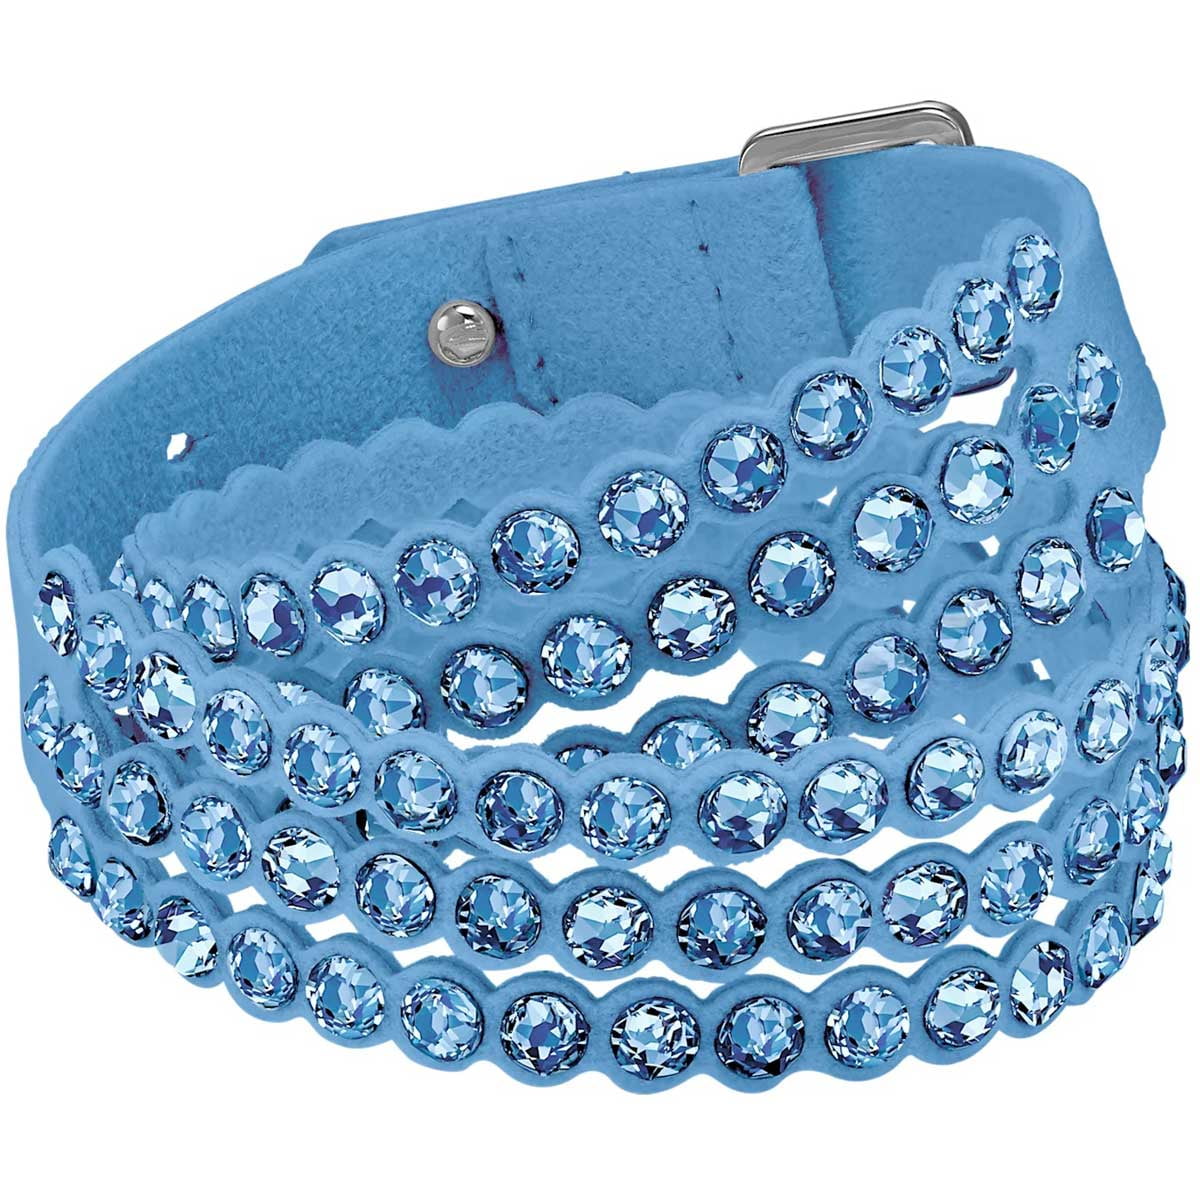 Swarovski Power Collection Bracelet - Blue - 5511697 - Walmart.com